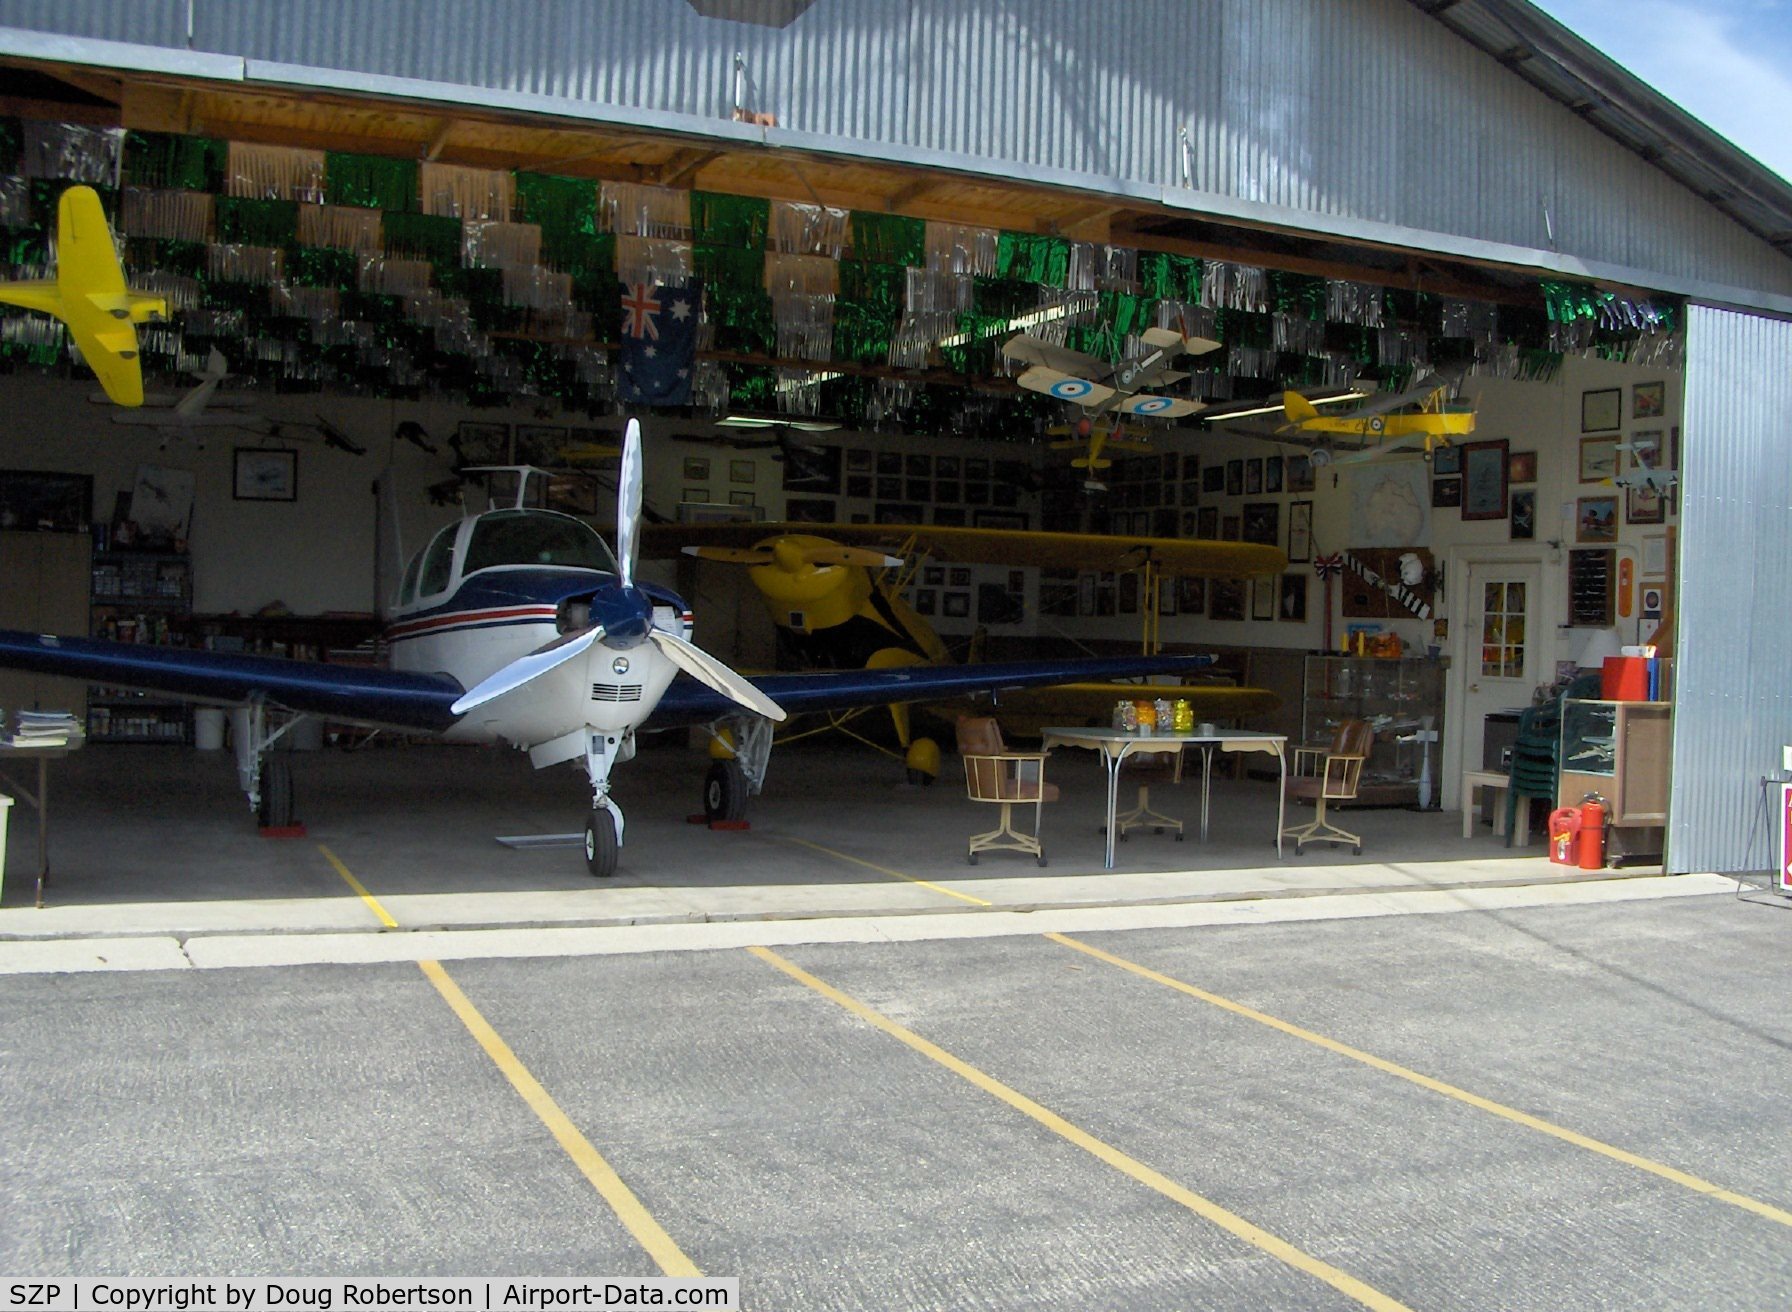 Santa Paula Airport (SZP) - Aviation Museum of Santa Paula, Hangar #3, The Quinn Bucker Jungmann/Jungmeister Hangar. Aircraft will vary-Pat has owned 55! 2015 correction-56 aircraft owned!